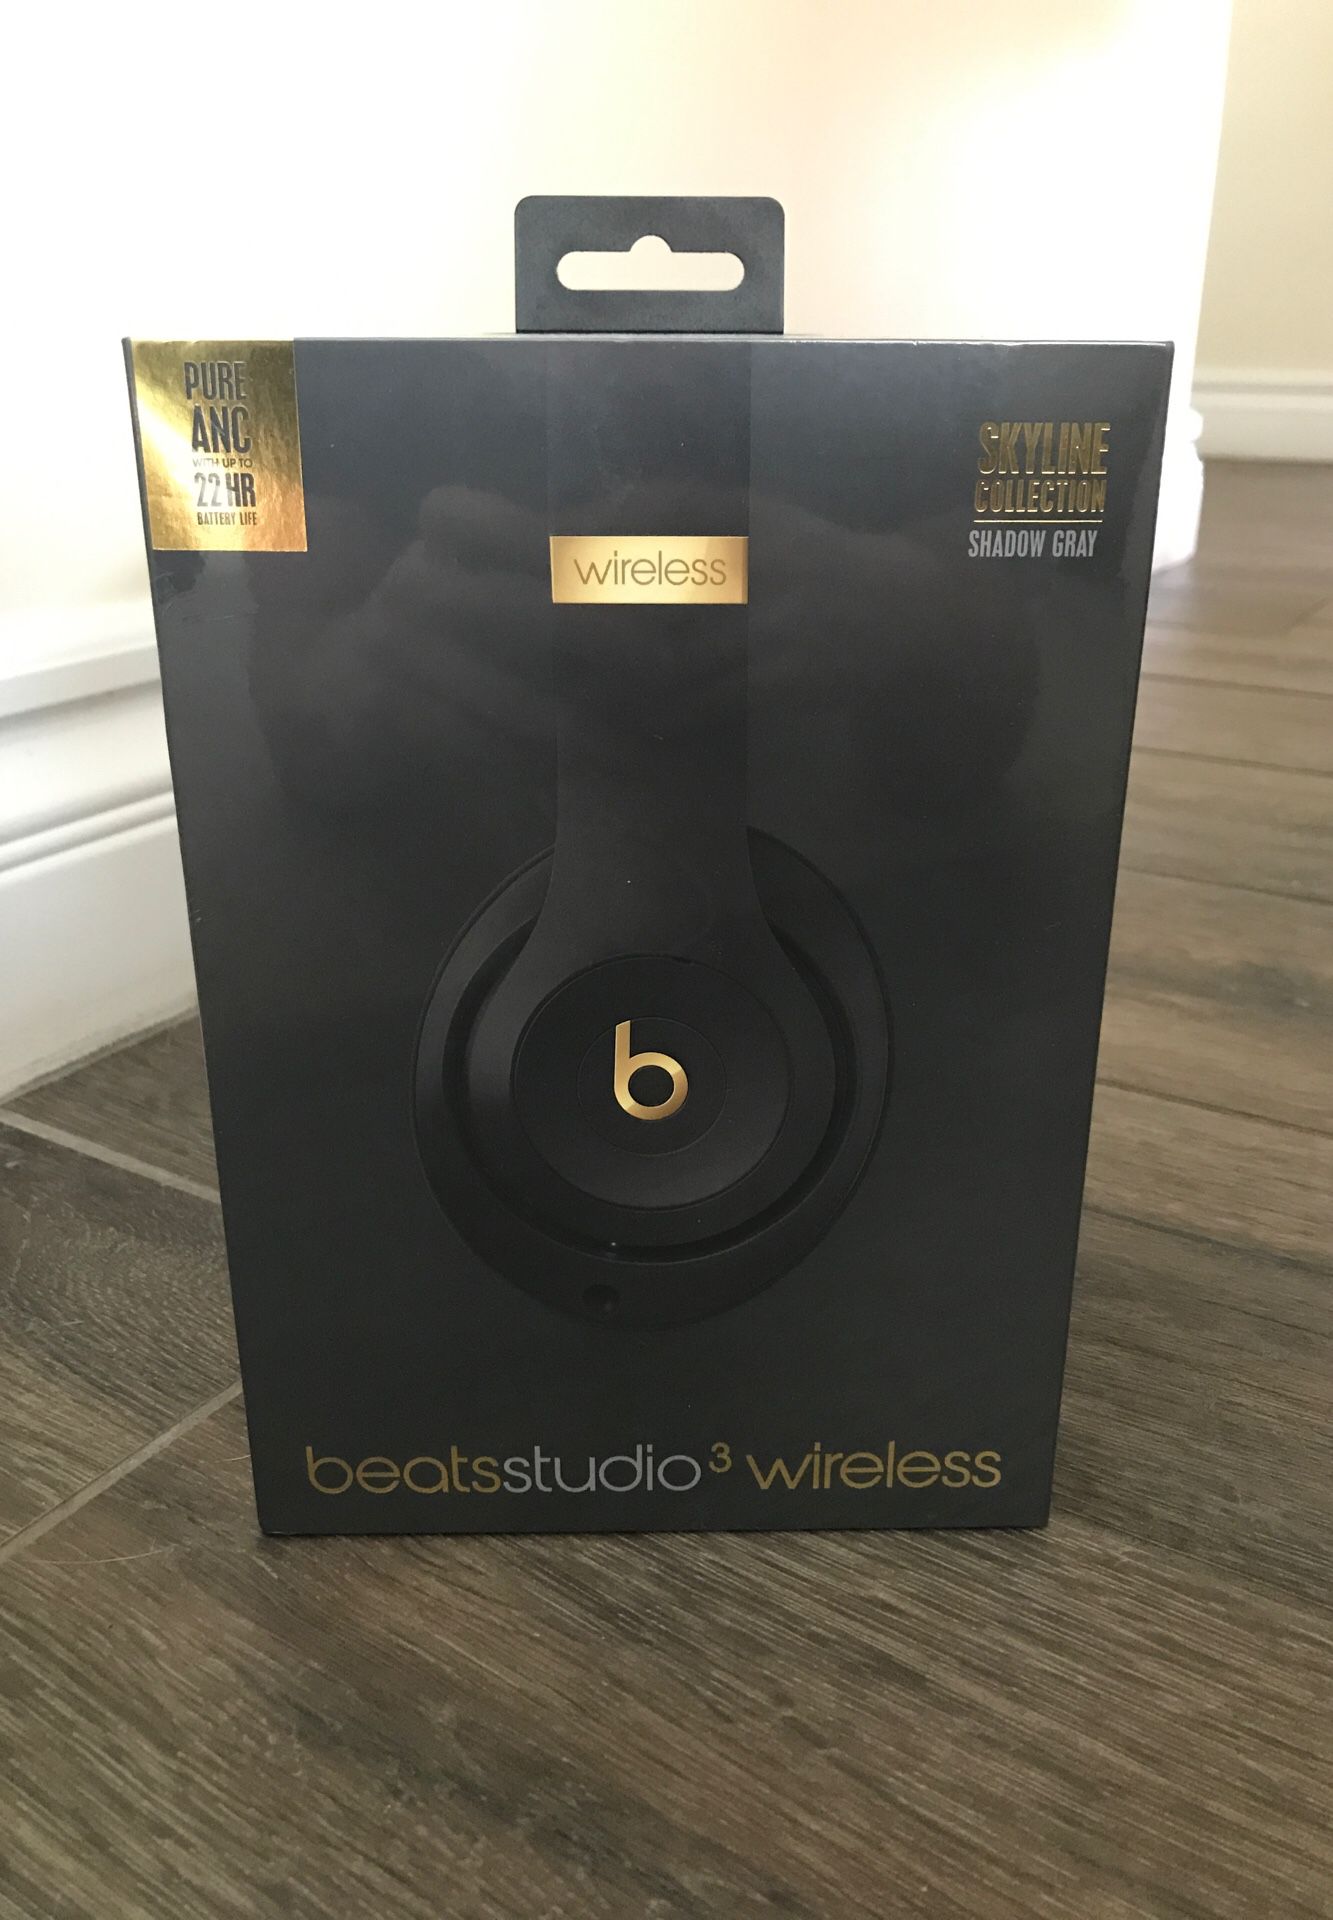 Beats studio 3 wireless headphones shadow gray sealed (brand new)